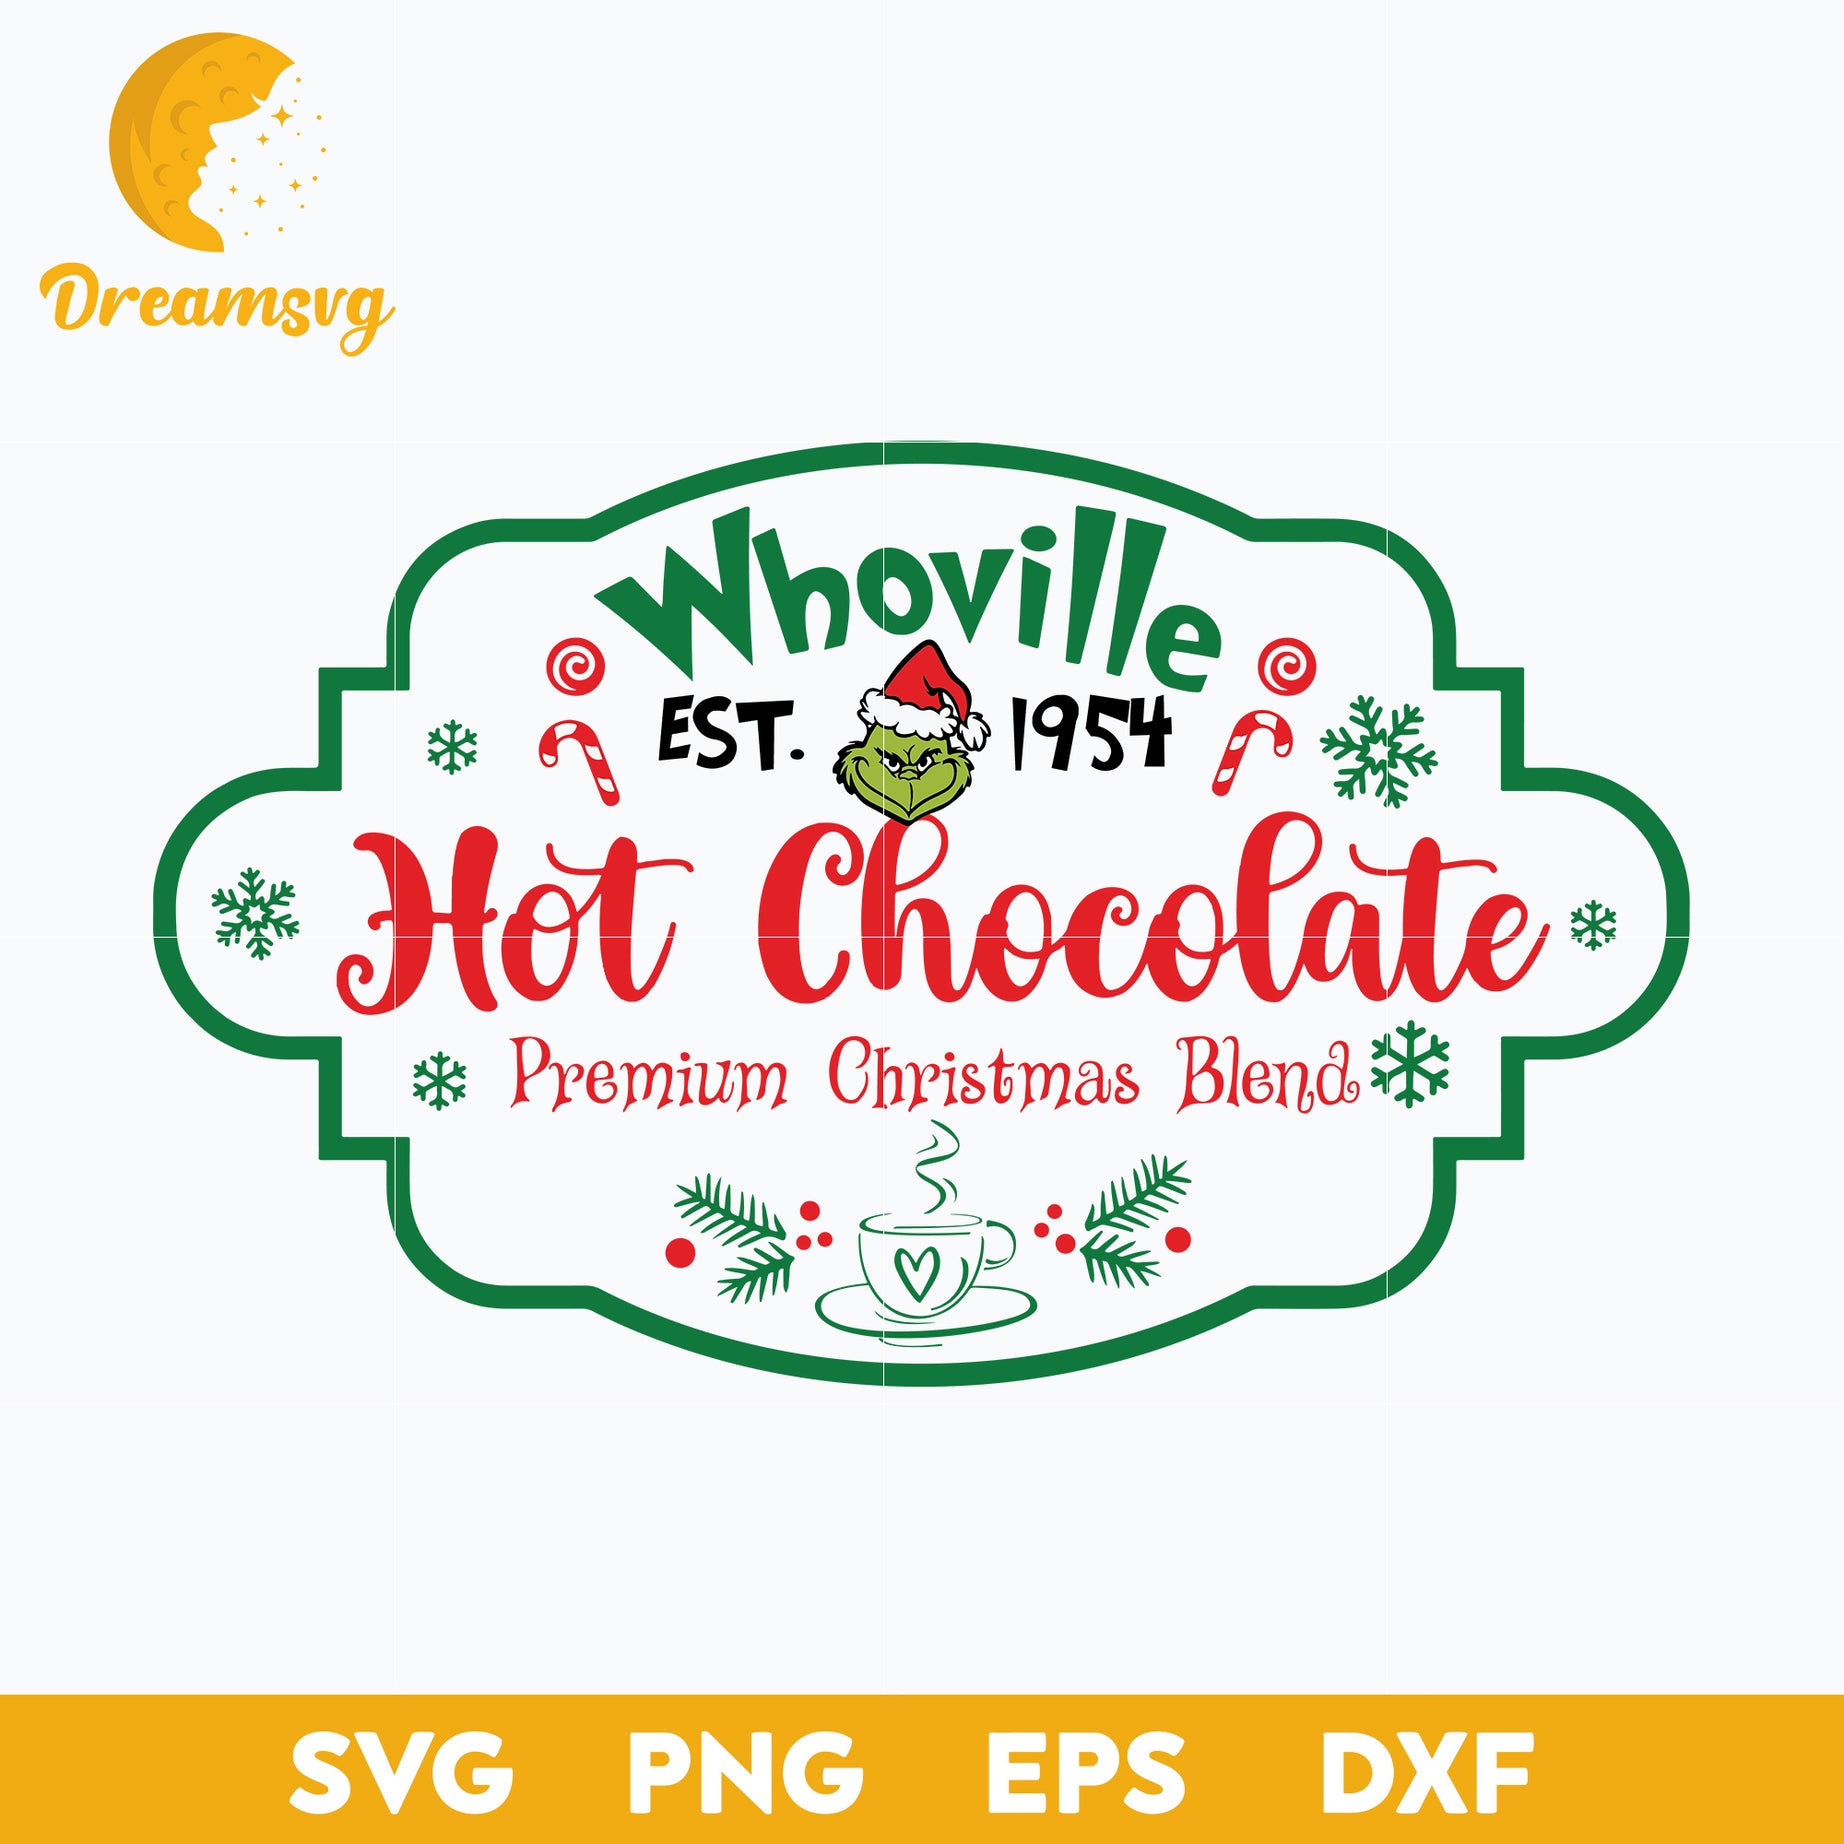 Whoville Hot Chocolate Premium Christmas Blend EST.1954 SVG, Grinch Christmas SVG